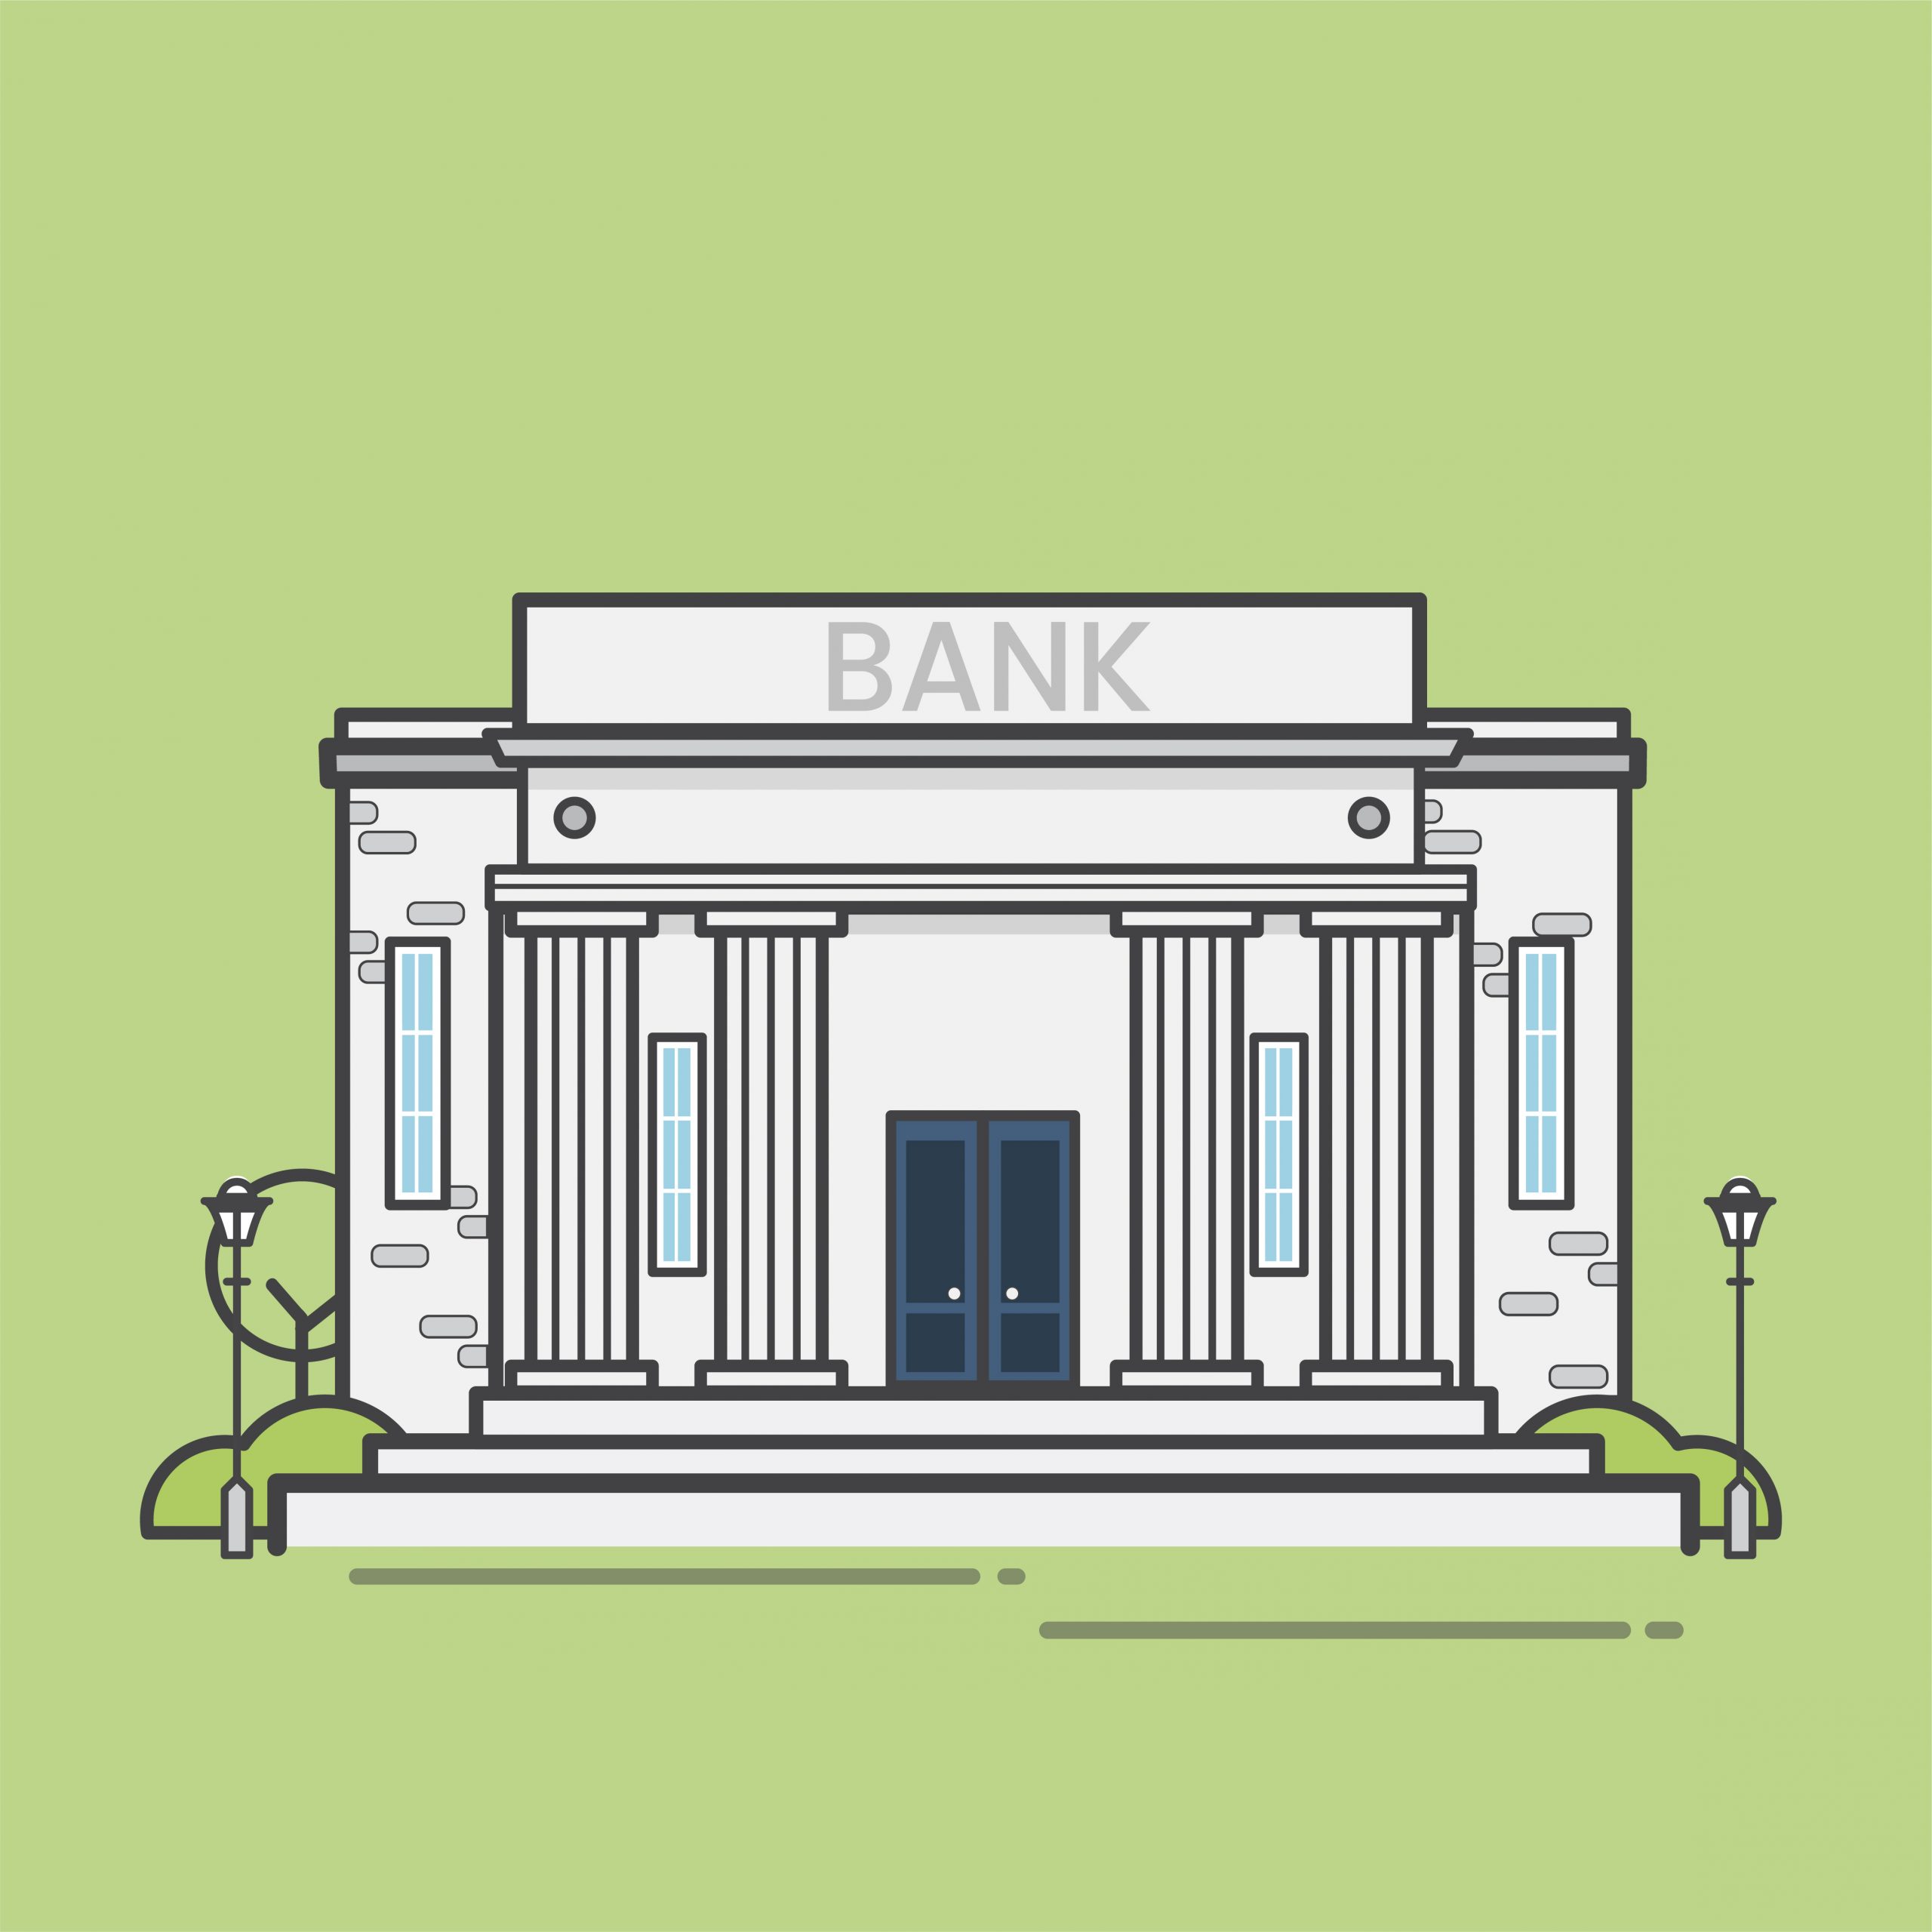 Государственный эмиссионный банк. Банк иллюстрация. Центральный эмиссионный банк. Банк рисунок. Эмиссионный банк картинка.